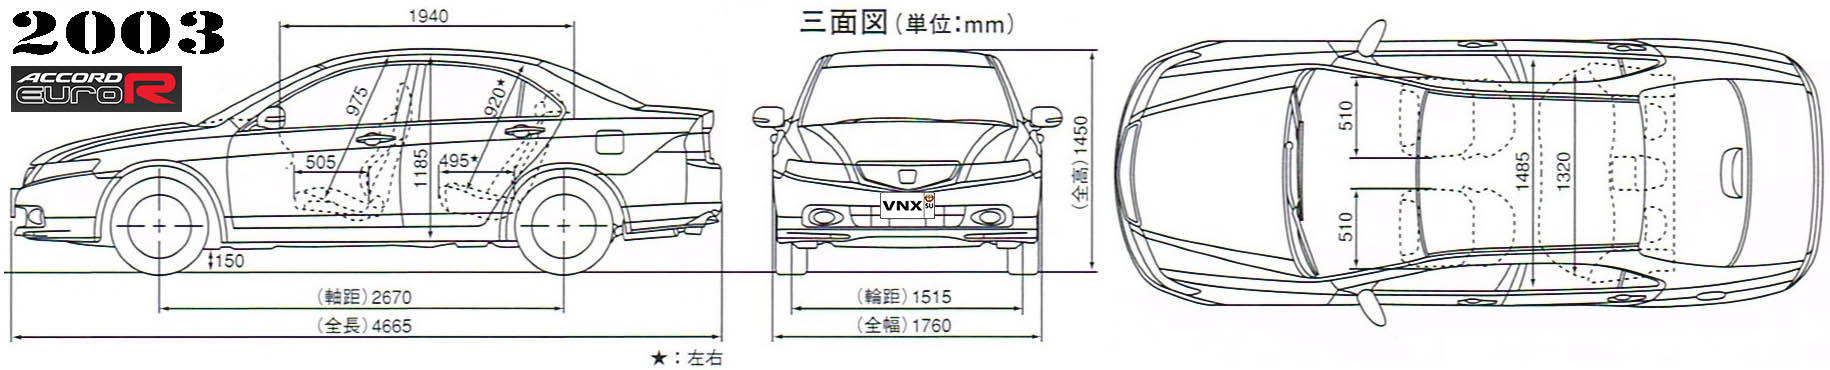 Габаритные размеры Хонда Аккорд 7 Евро Р (dimensions Honda Accord Euro R mk7)